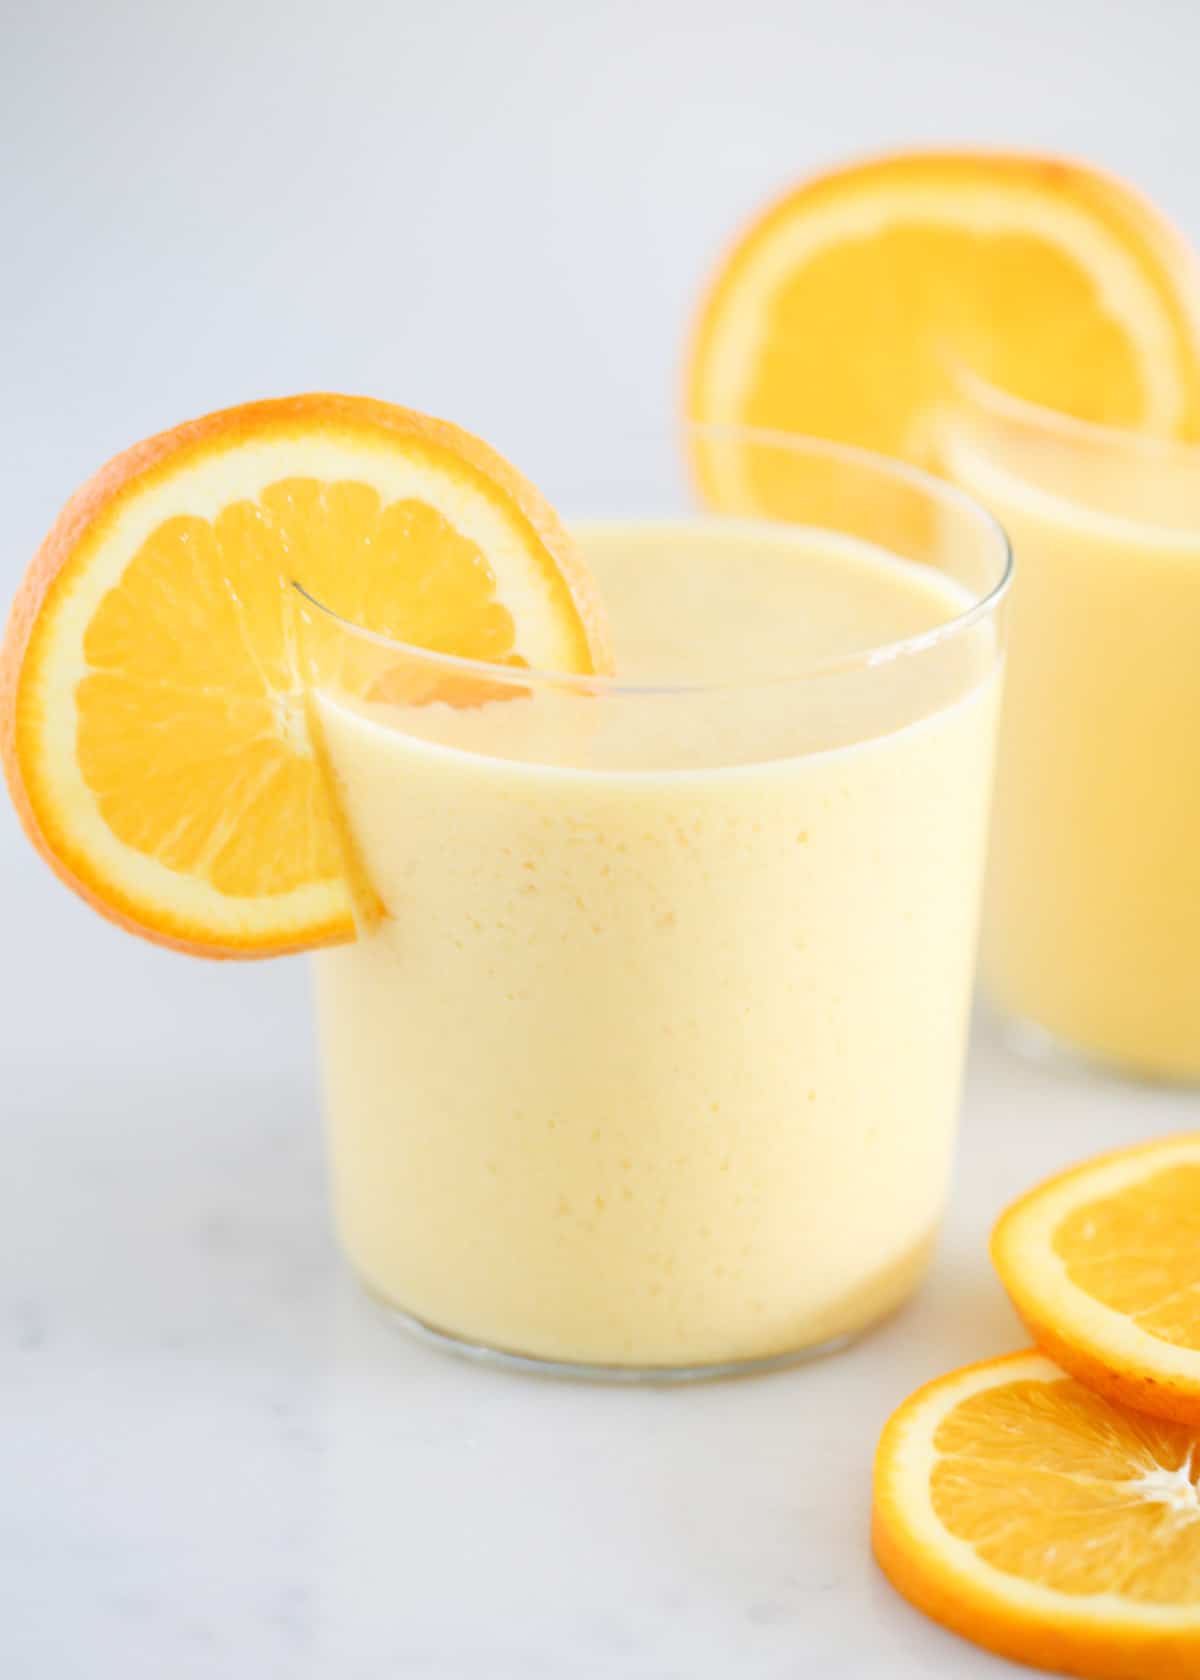 Orange Julius in a glass cup with orange slices.